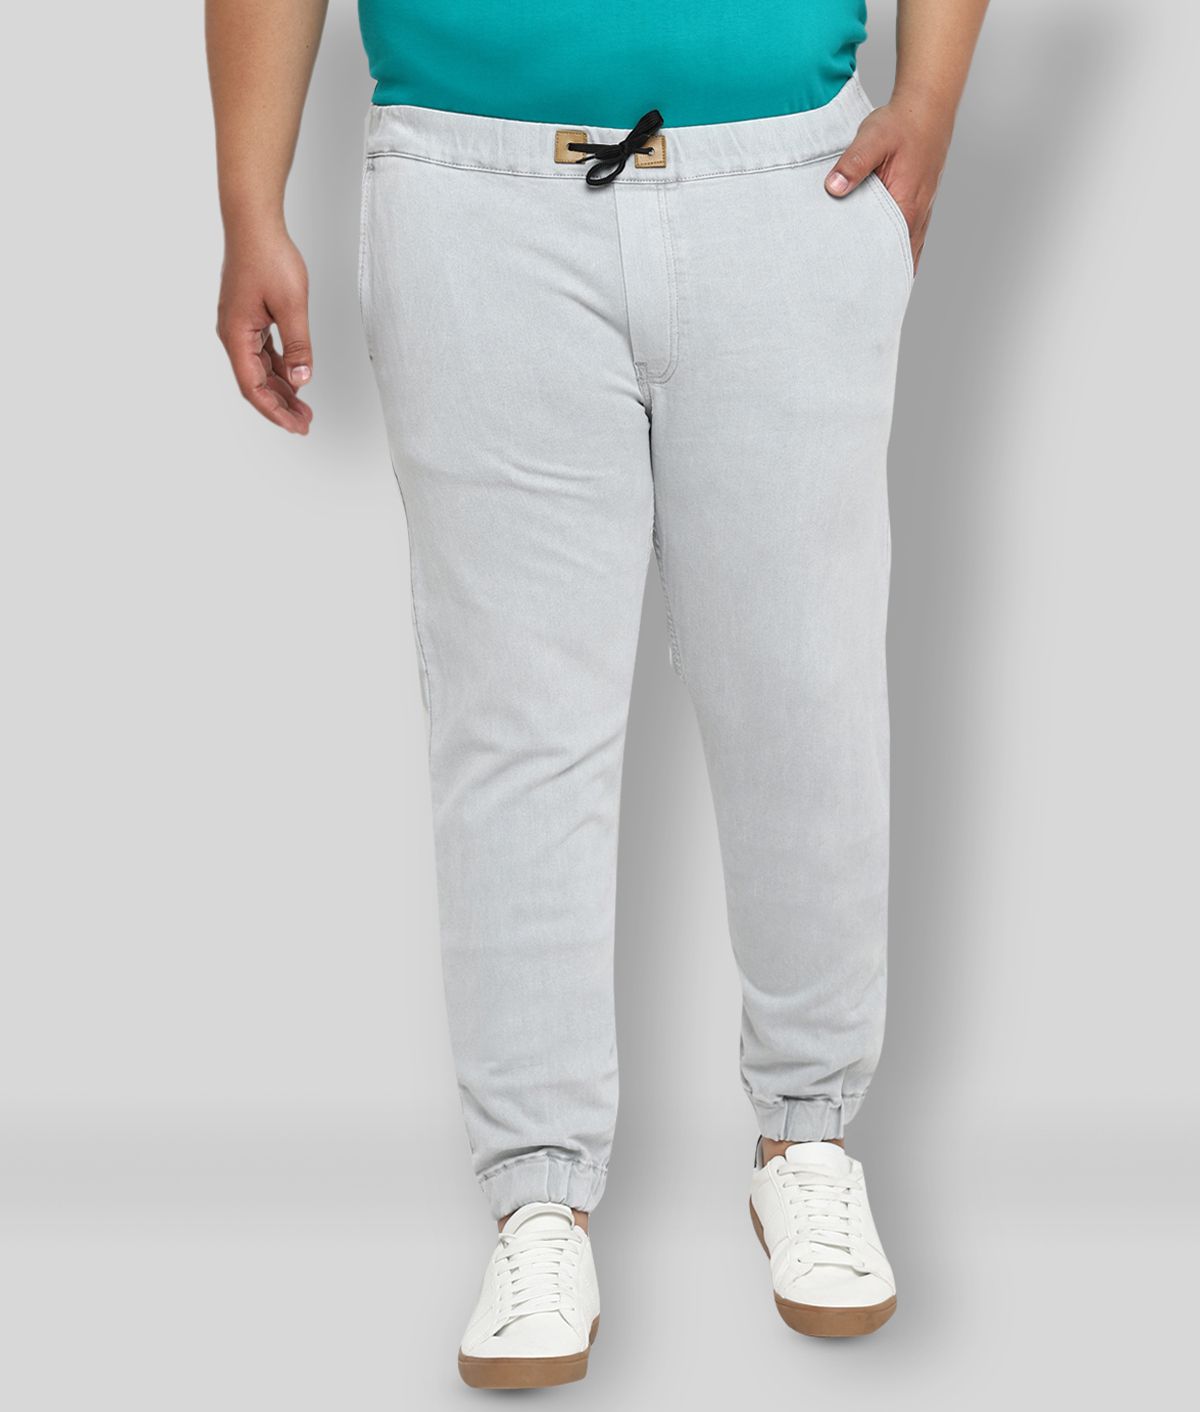     			Urbano Plus - Grey Cotton Blend Regular Fit Men's Jeans ( Pack of 1 )